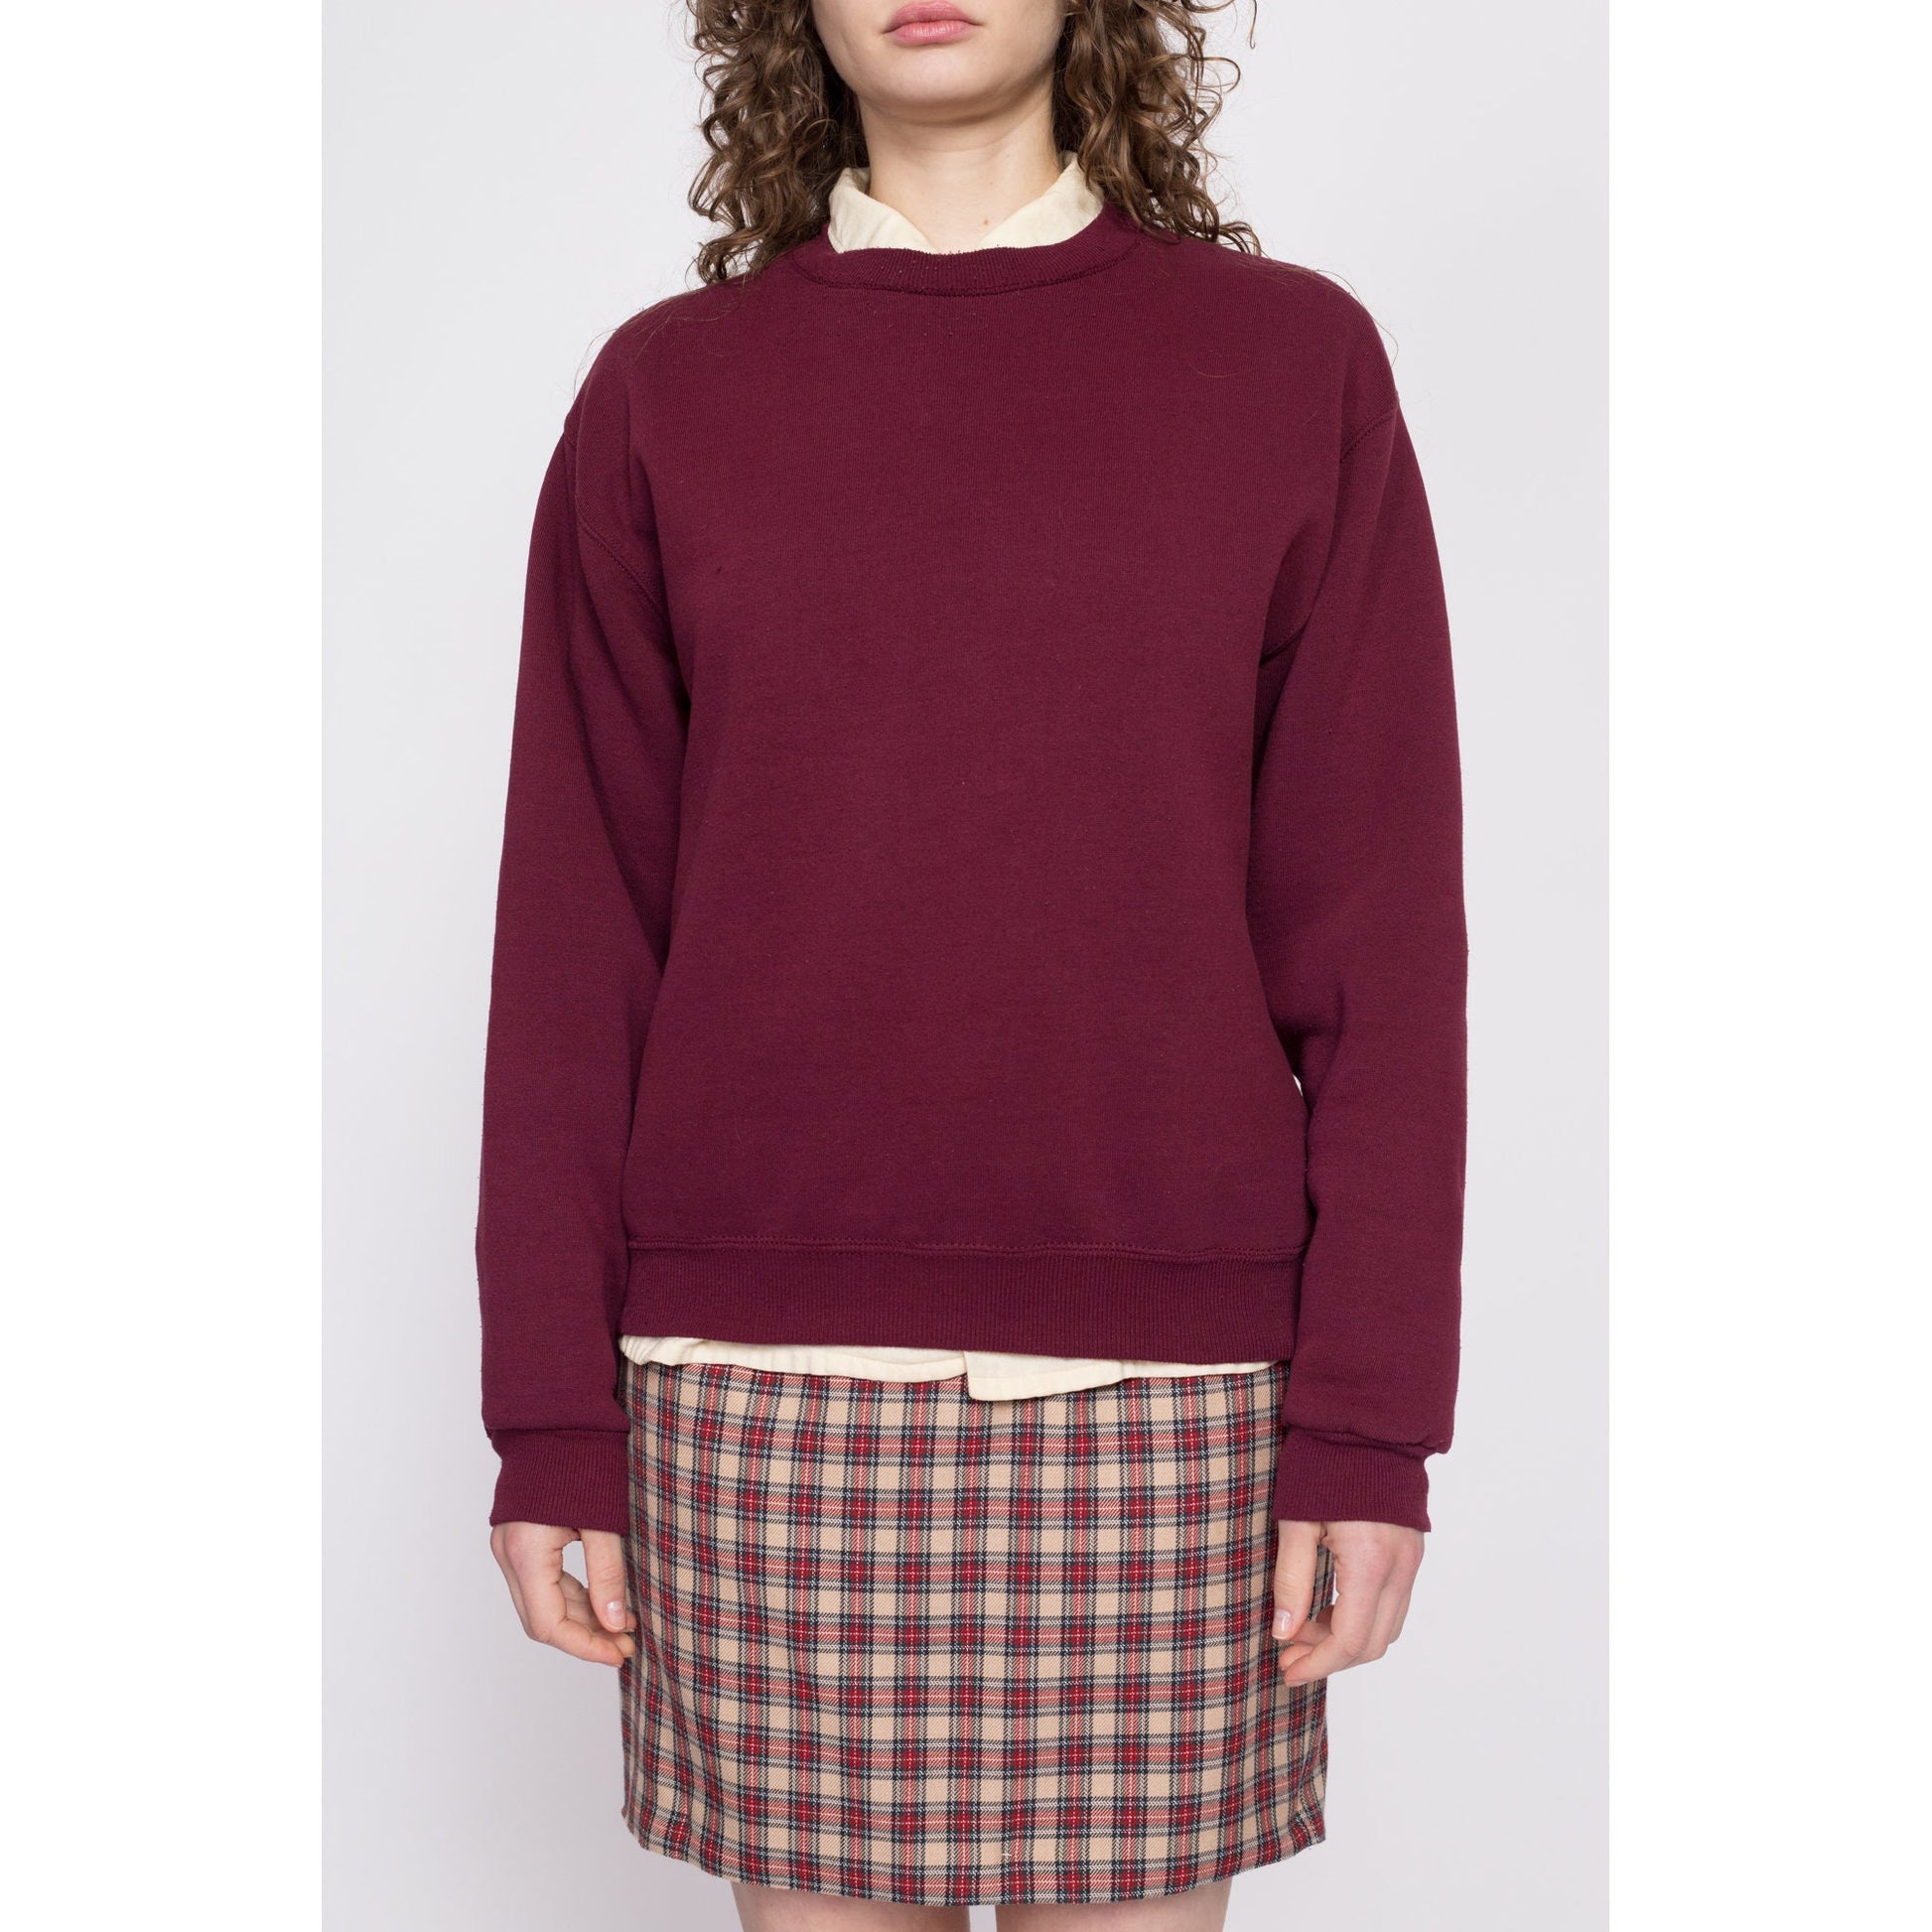 90s Wine Red Crewneck Sweatshirt - Men's Medium, Women's Large | Vintage Unisex Plain Cotton Blend Blank Pullover